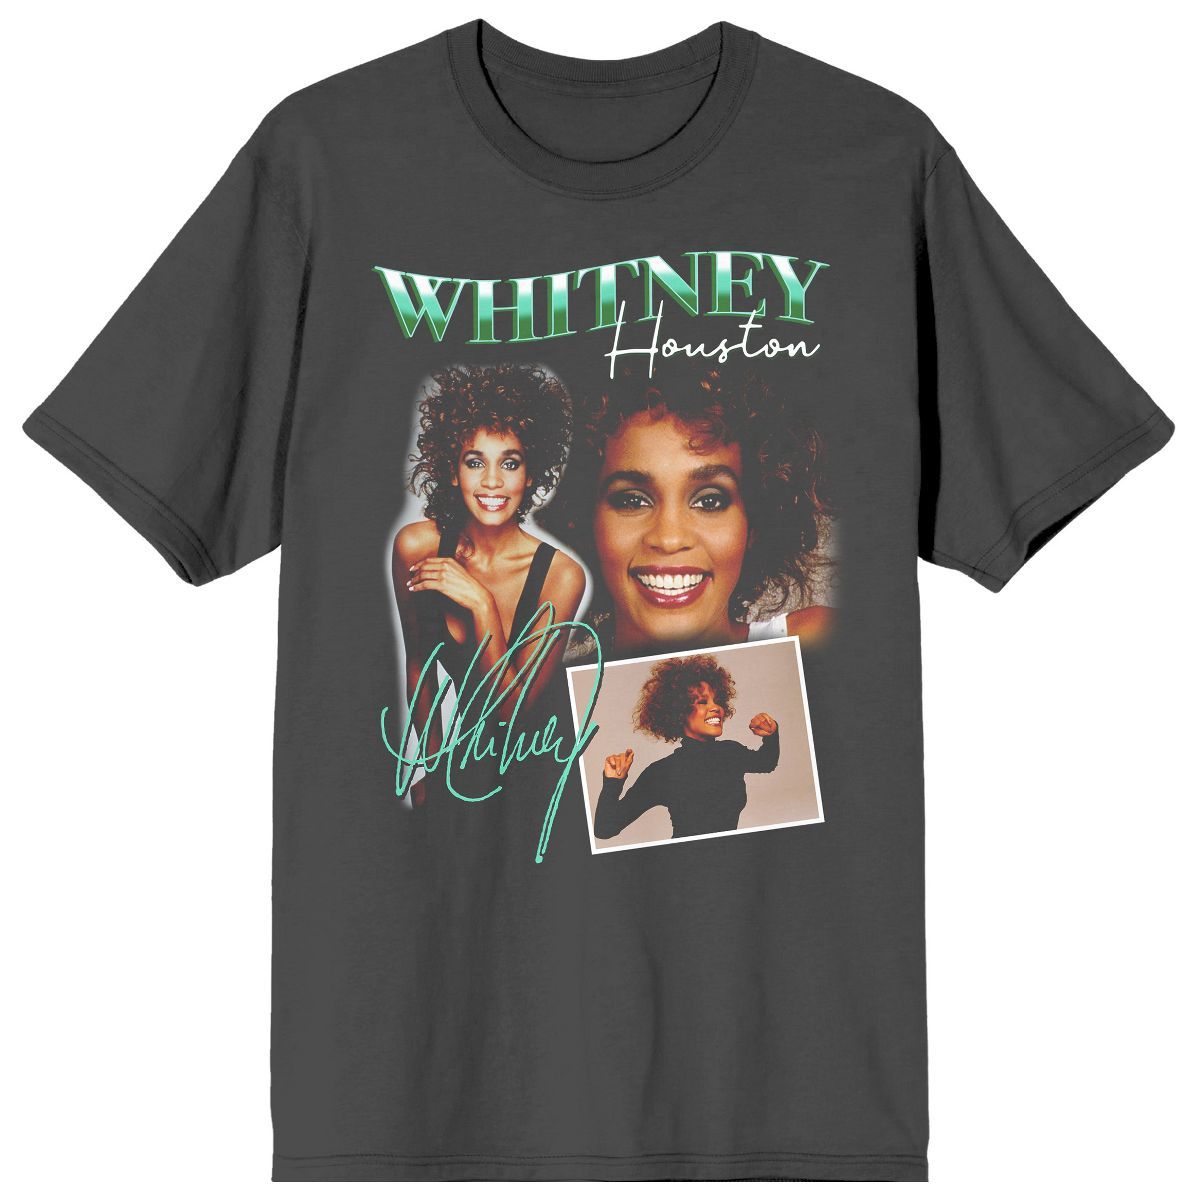 Whitney Houston Portrait Collage Unisex Adult Charcoal T-shirt | Target